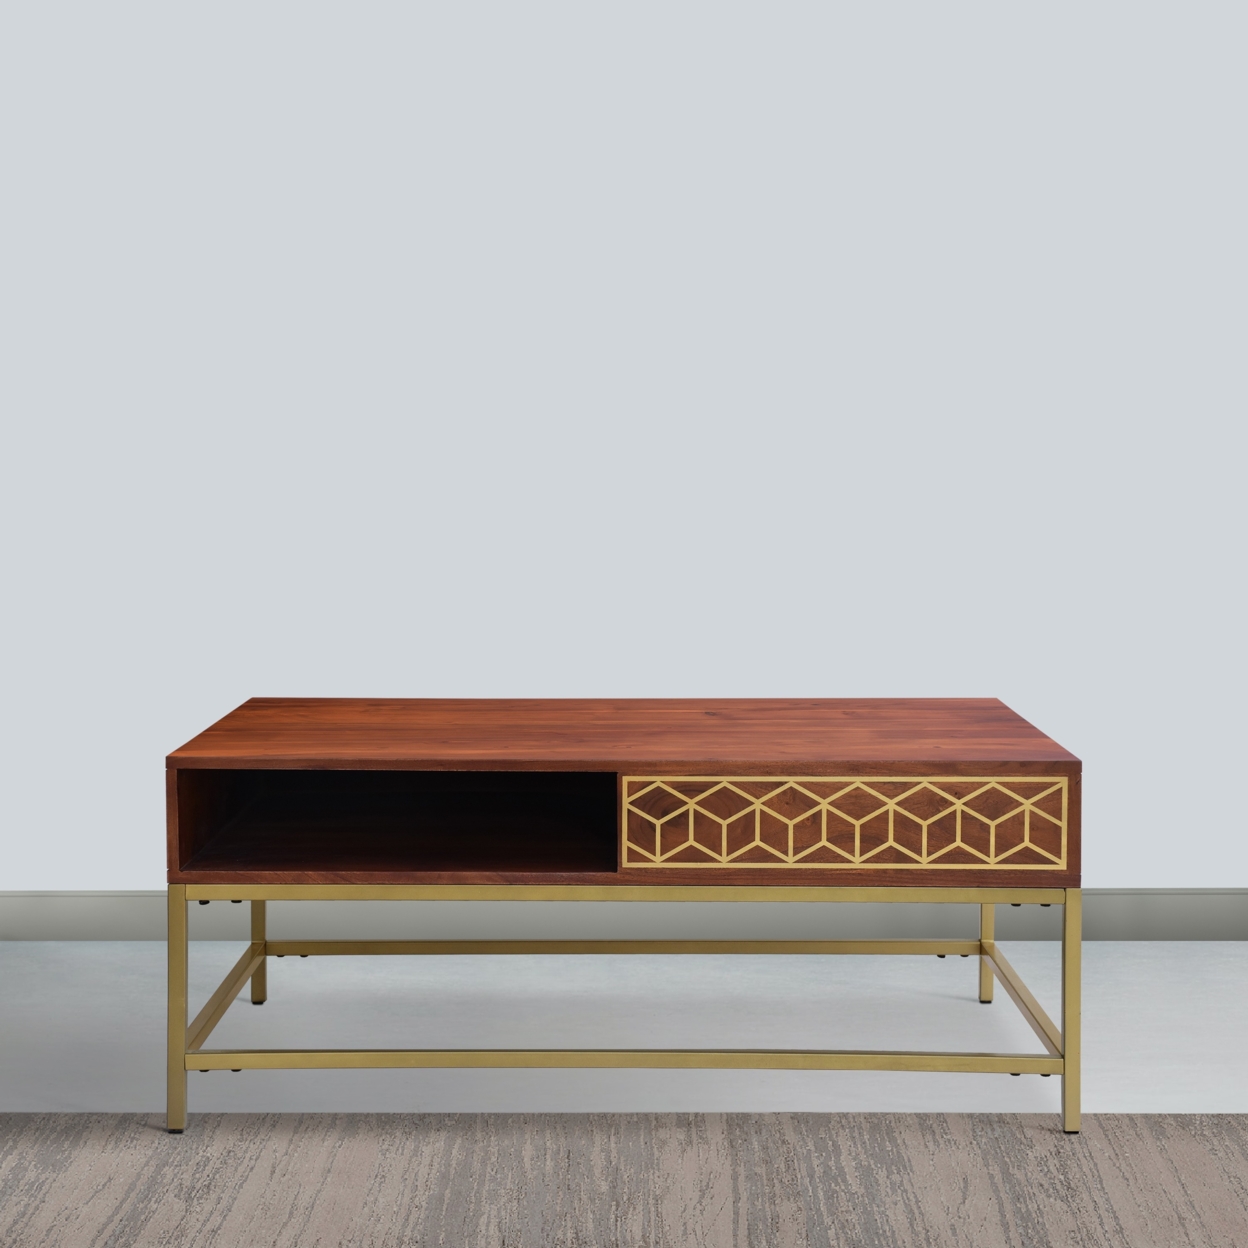 Kalyn 43 Inch Acacia Wood Coffee Table, Geometric Screen Printed Design, 1 Open Compartment, Natural Brown, Brass- Saltoro Sherpi